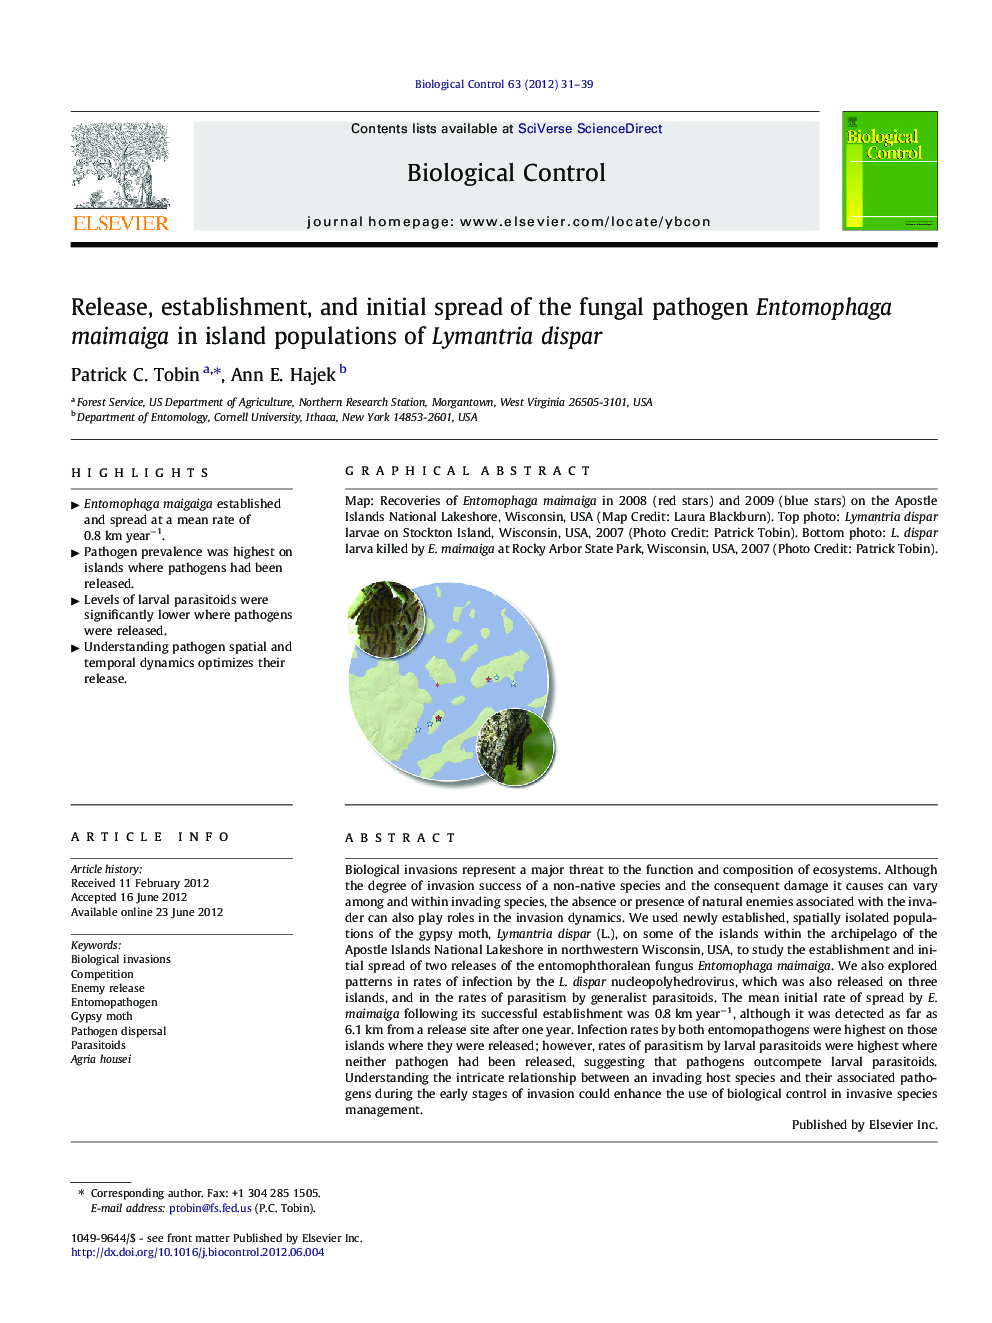 Release, establishment, and initial spread of the fungal pathogen Entomophaga maimaiga in island populations of Lymantria dispar